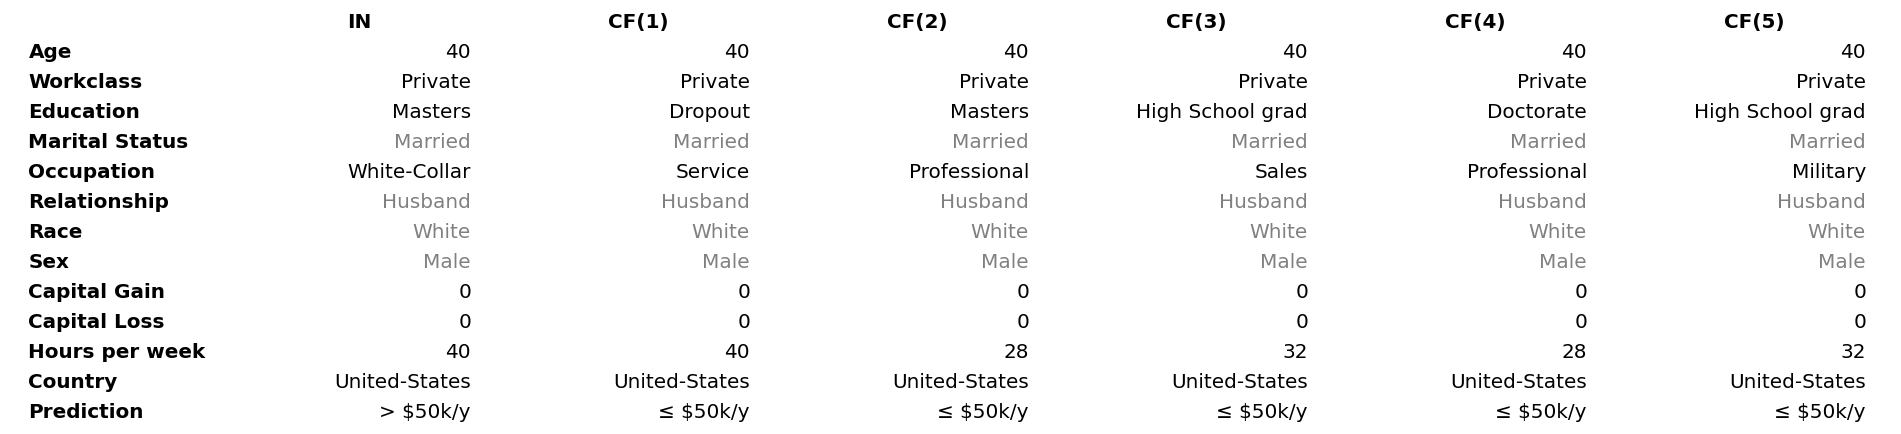 CFRL_adult_diversity